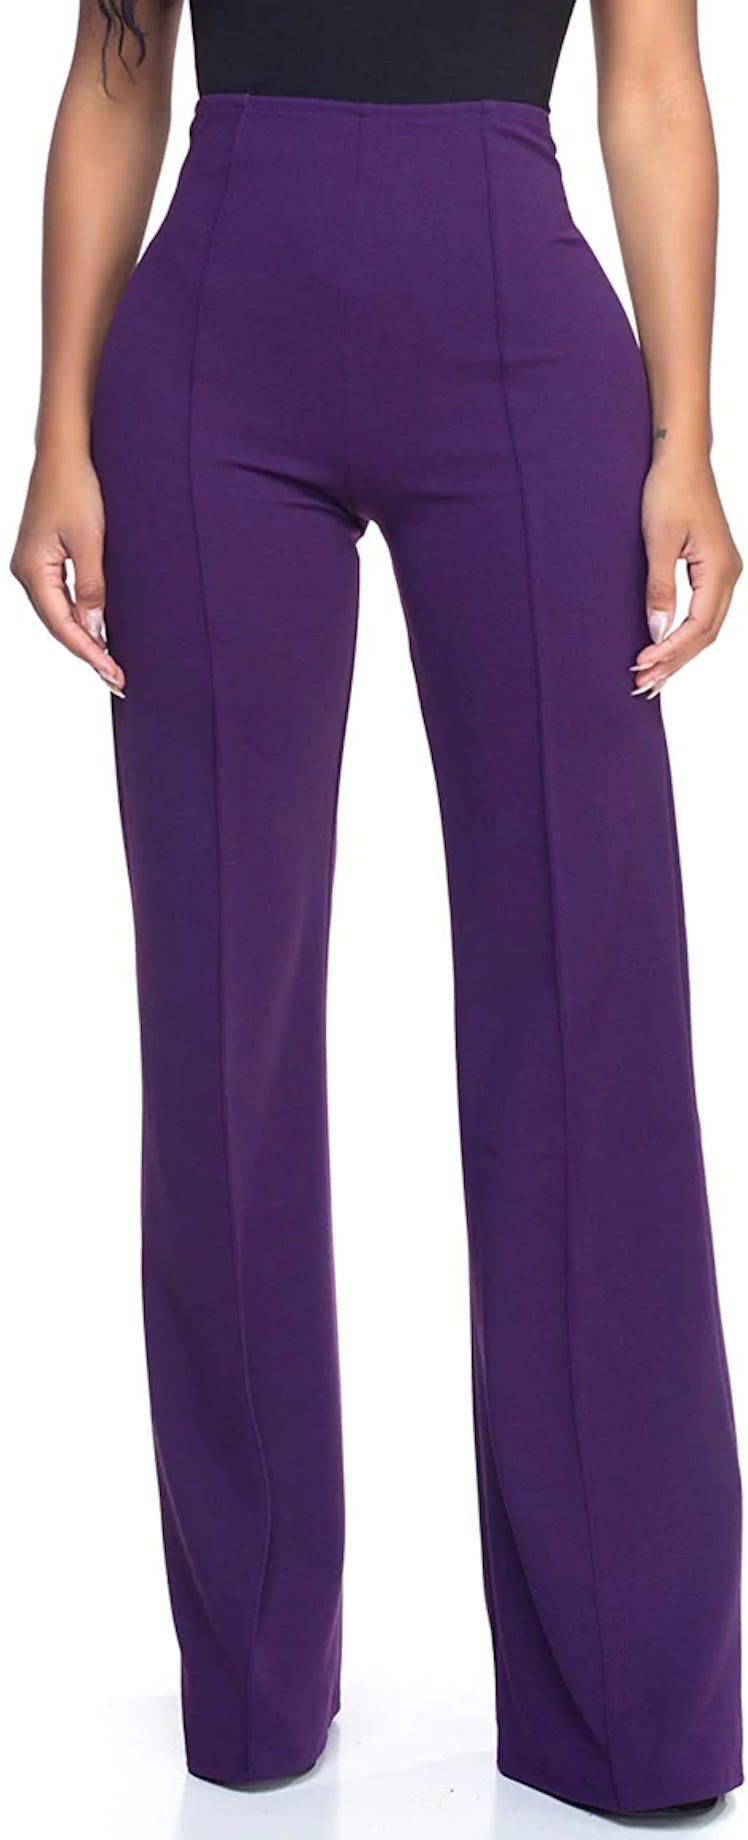 Bella Valentina's High Waist Purple Dress Pants.